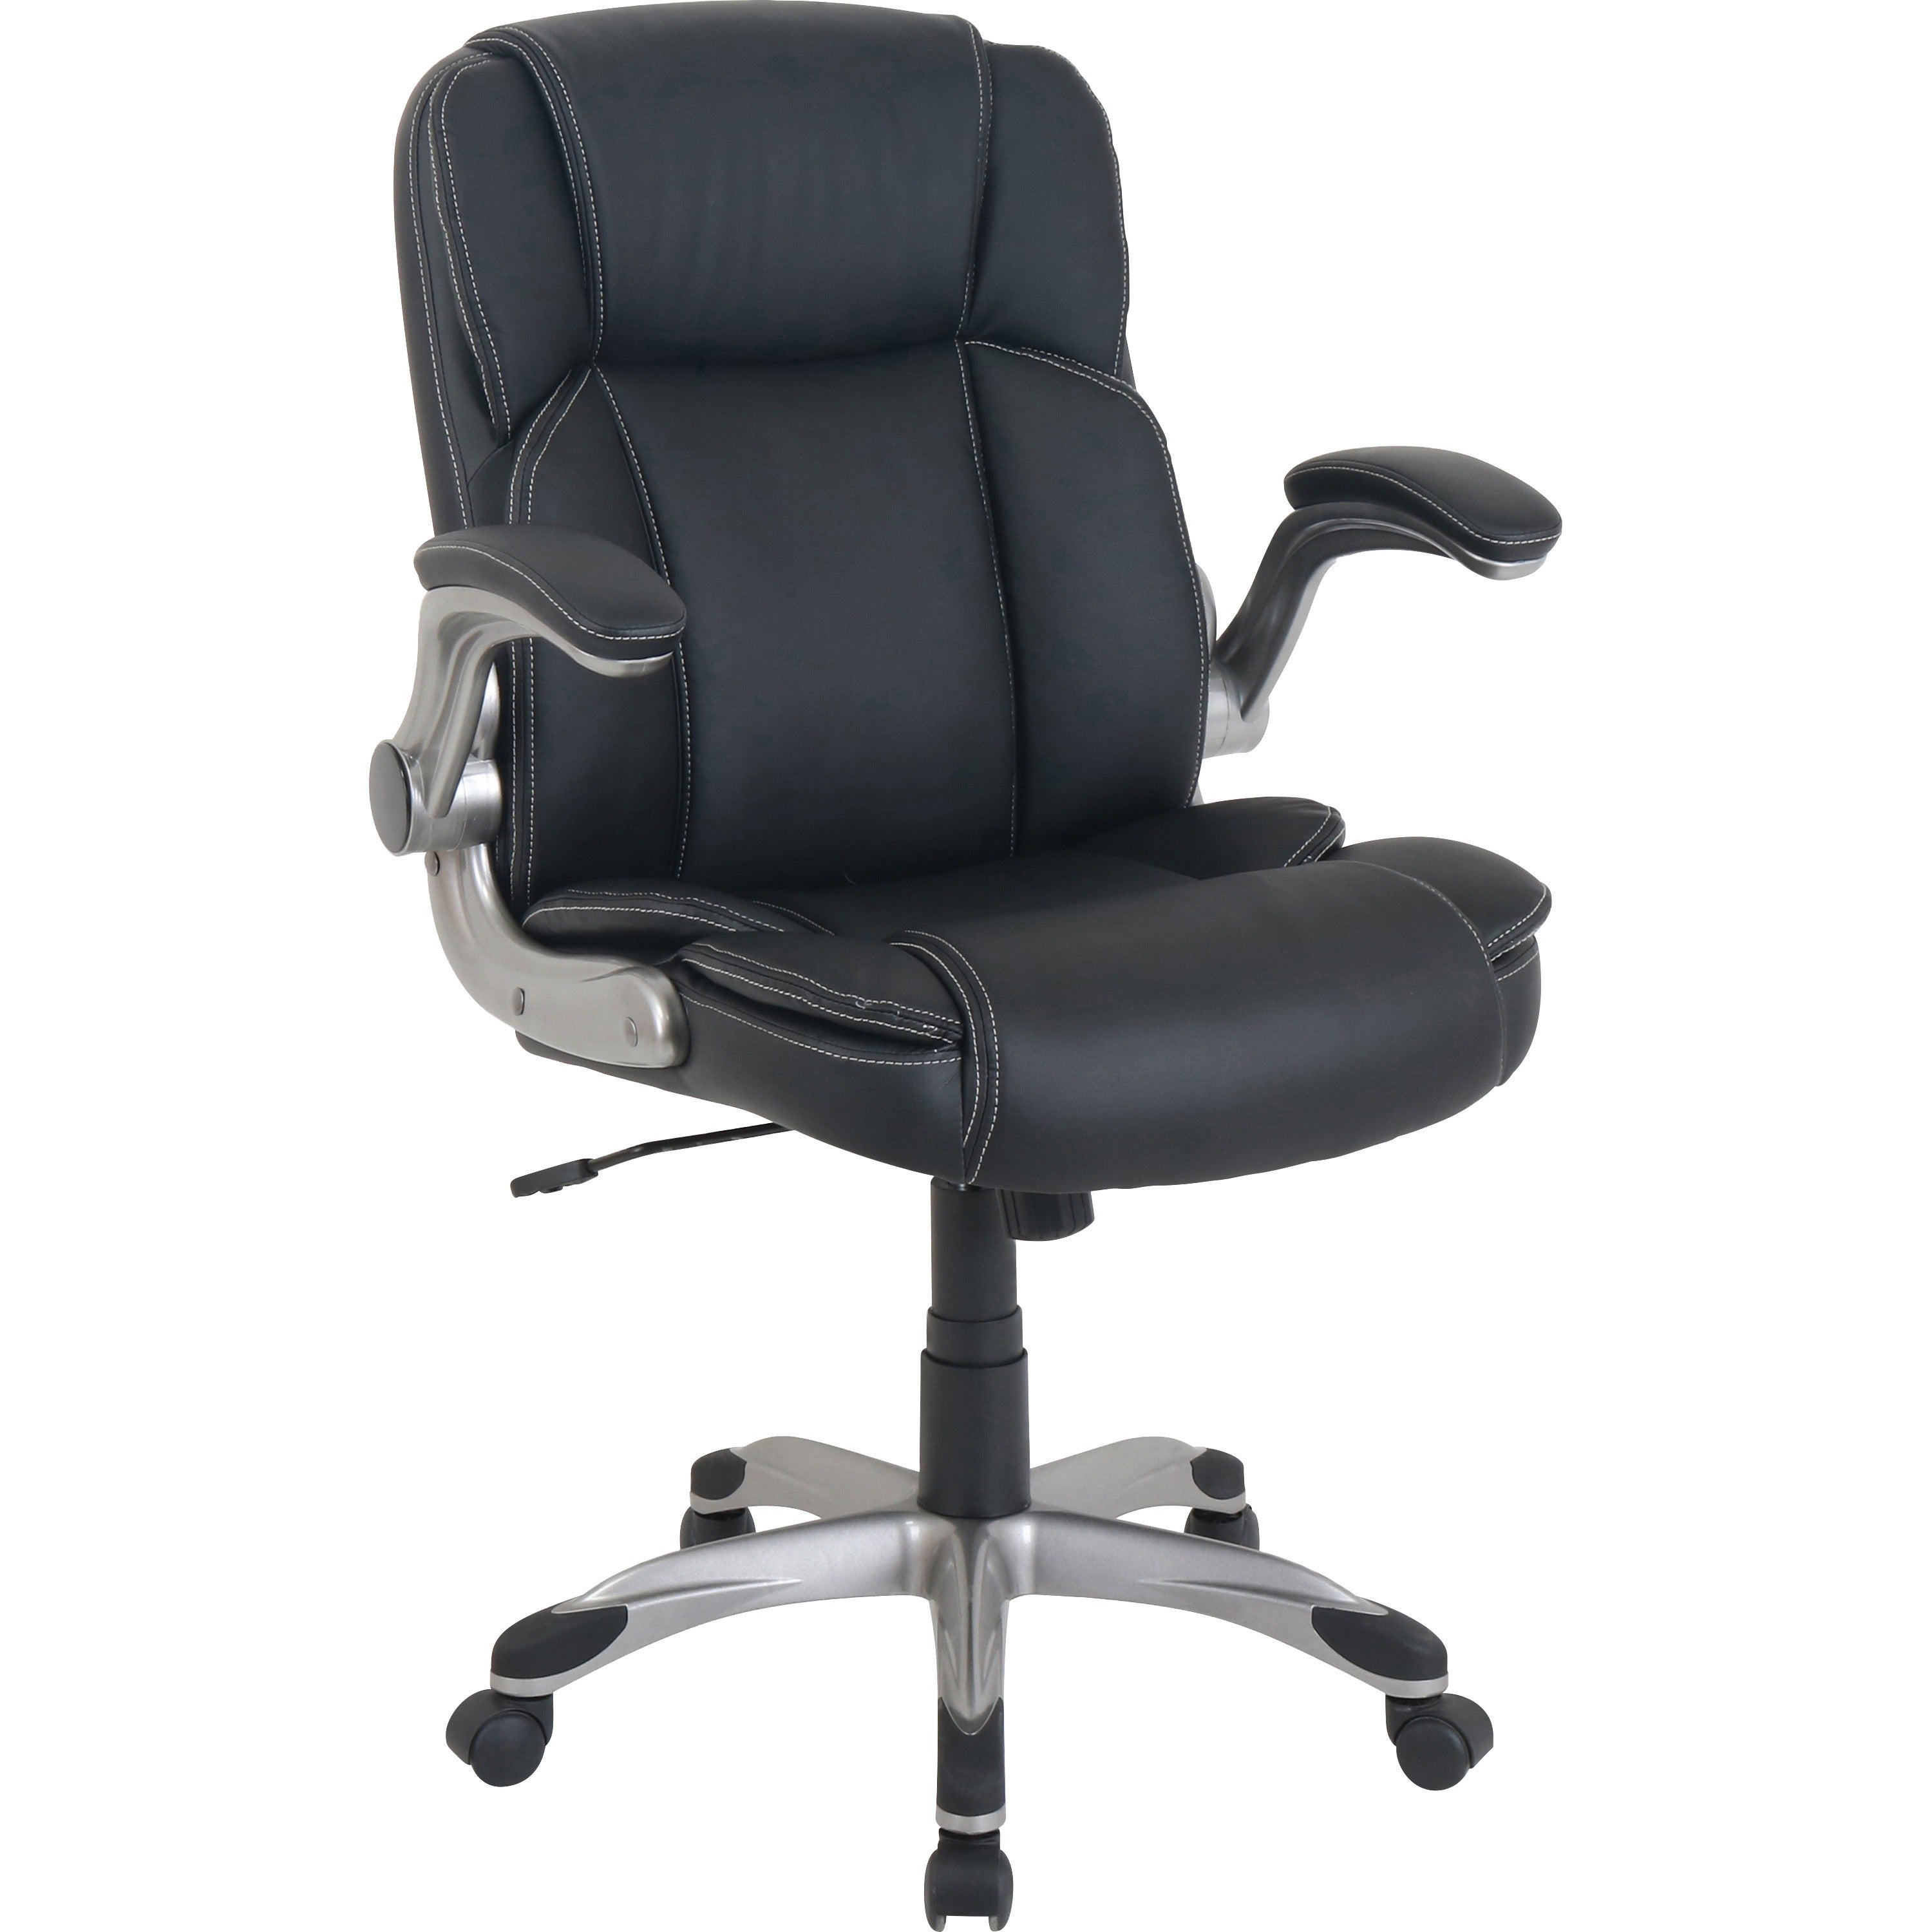 nusparc-leather-rolling-chair-mid-back-5-star-base-black-bonded-leather-armrest-1-each_nprch101labk - 1